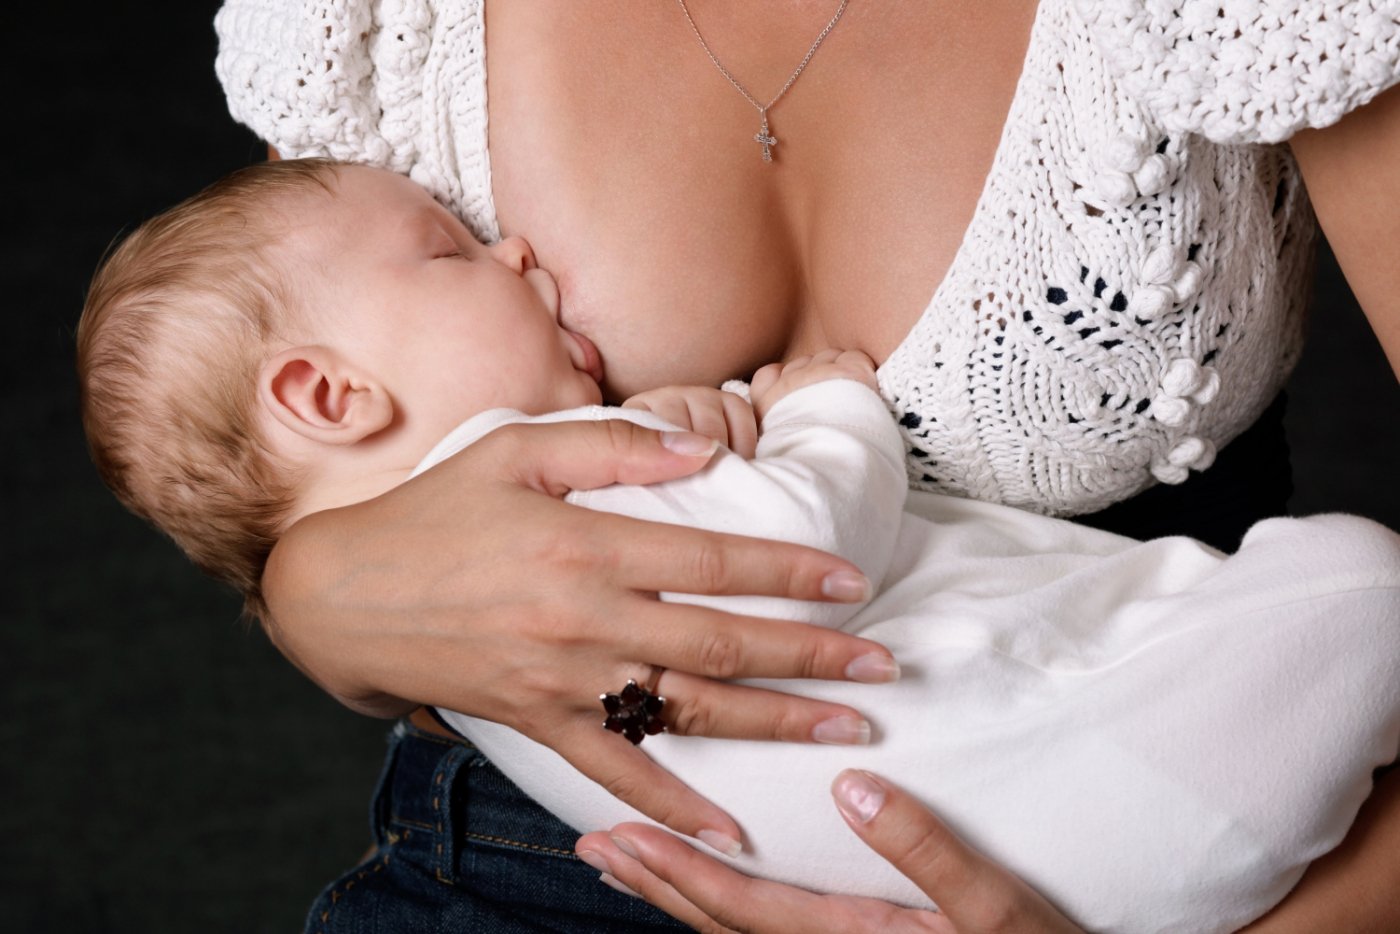 Woman breastfeeding